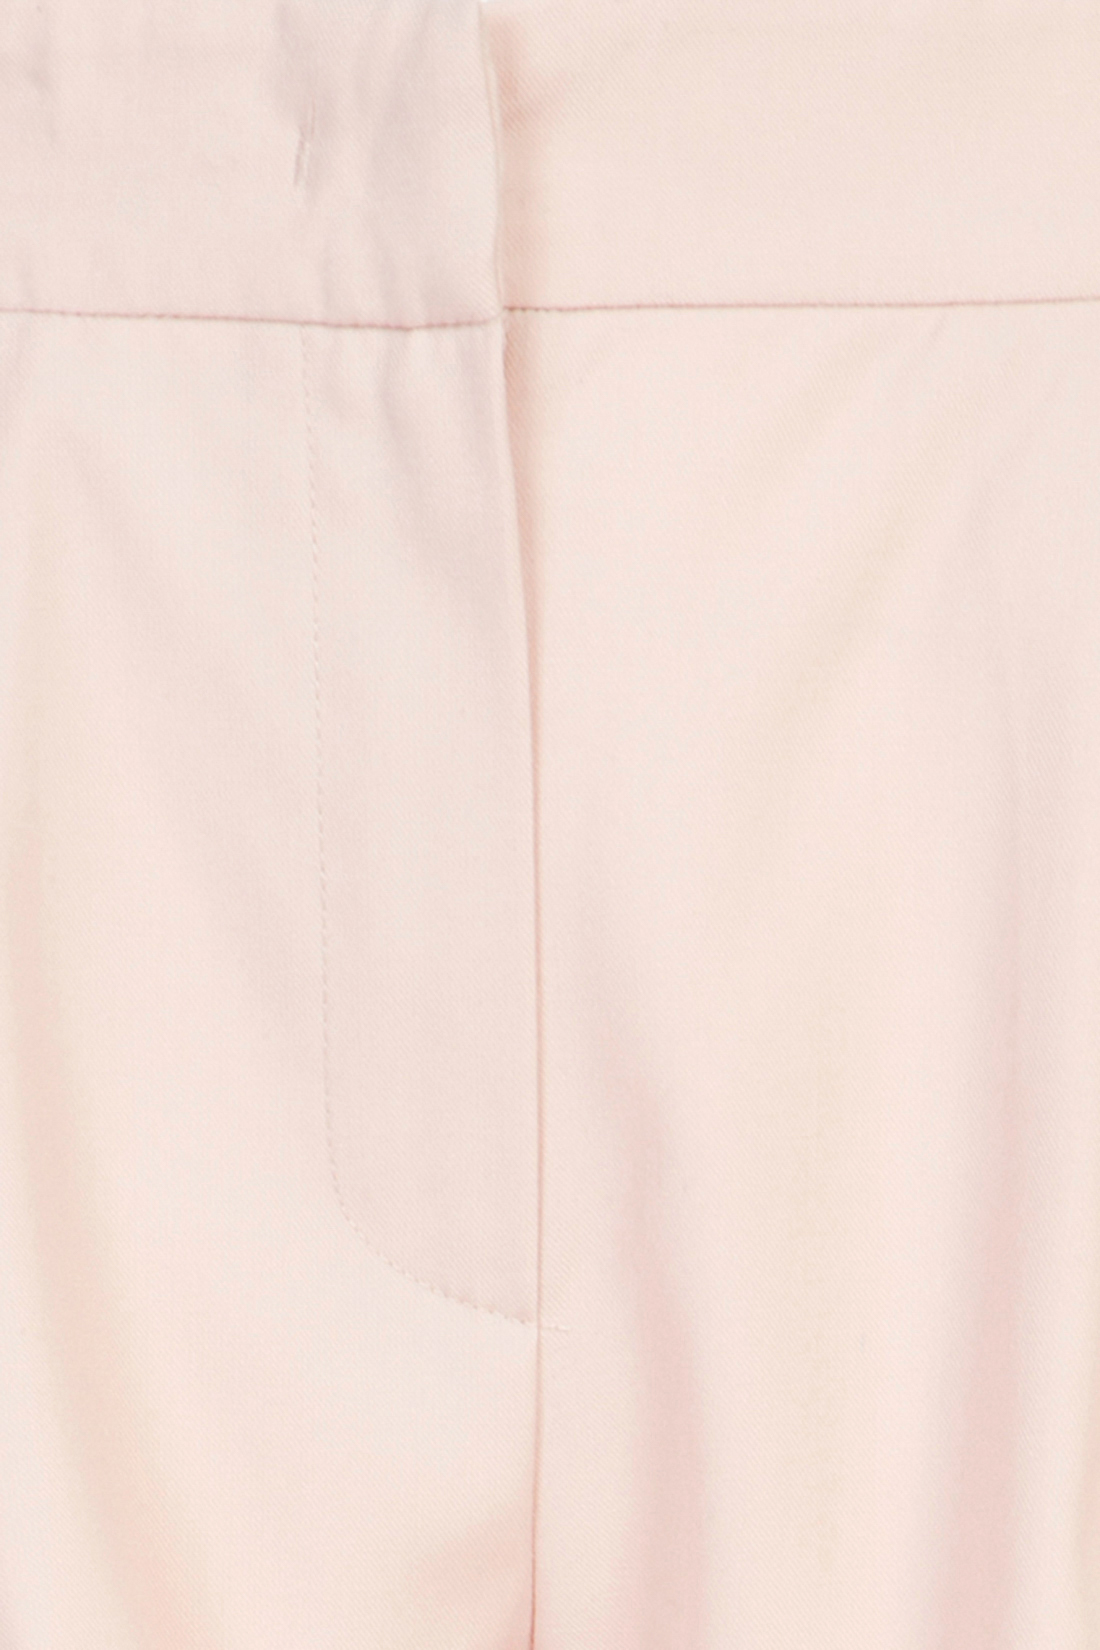 Брюки со складками у пояса (арт. baon B297018), размер XS, цвет розовый Брюки со складками у пояса (арт. baon B297018) - фото 3